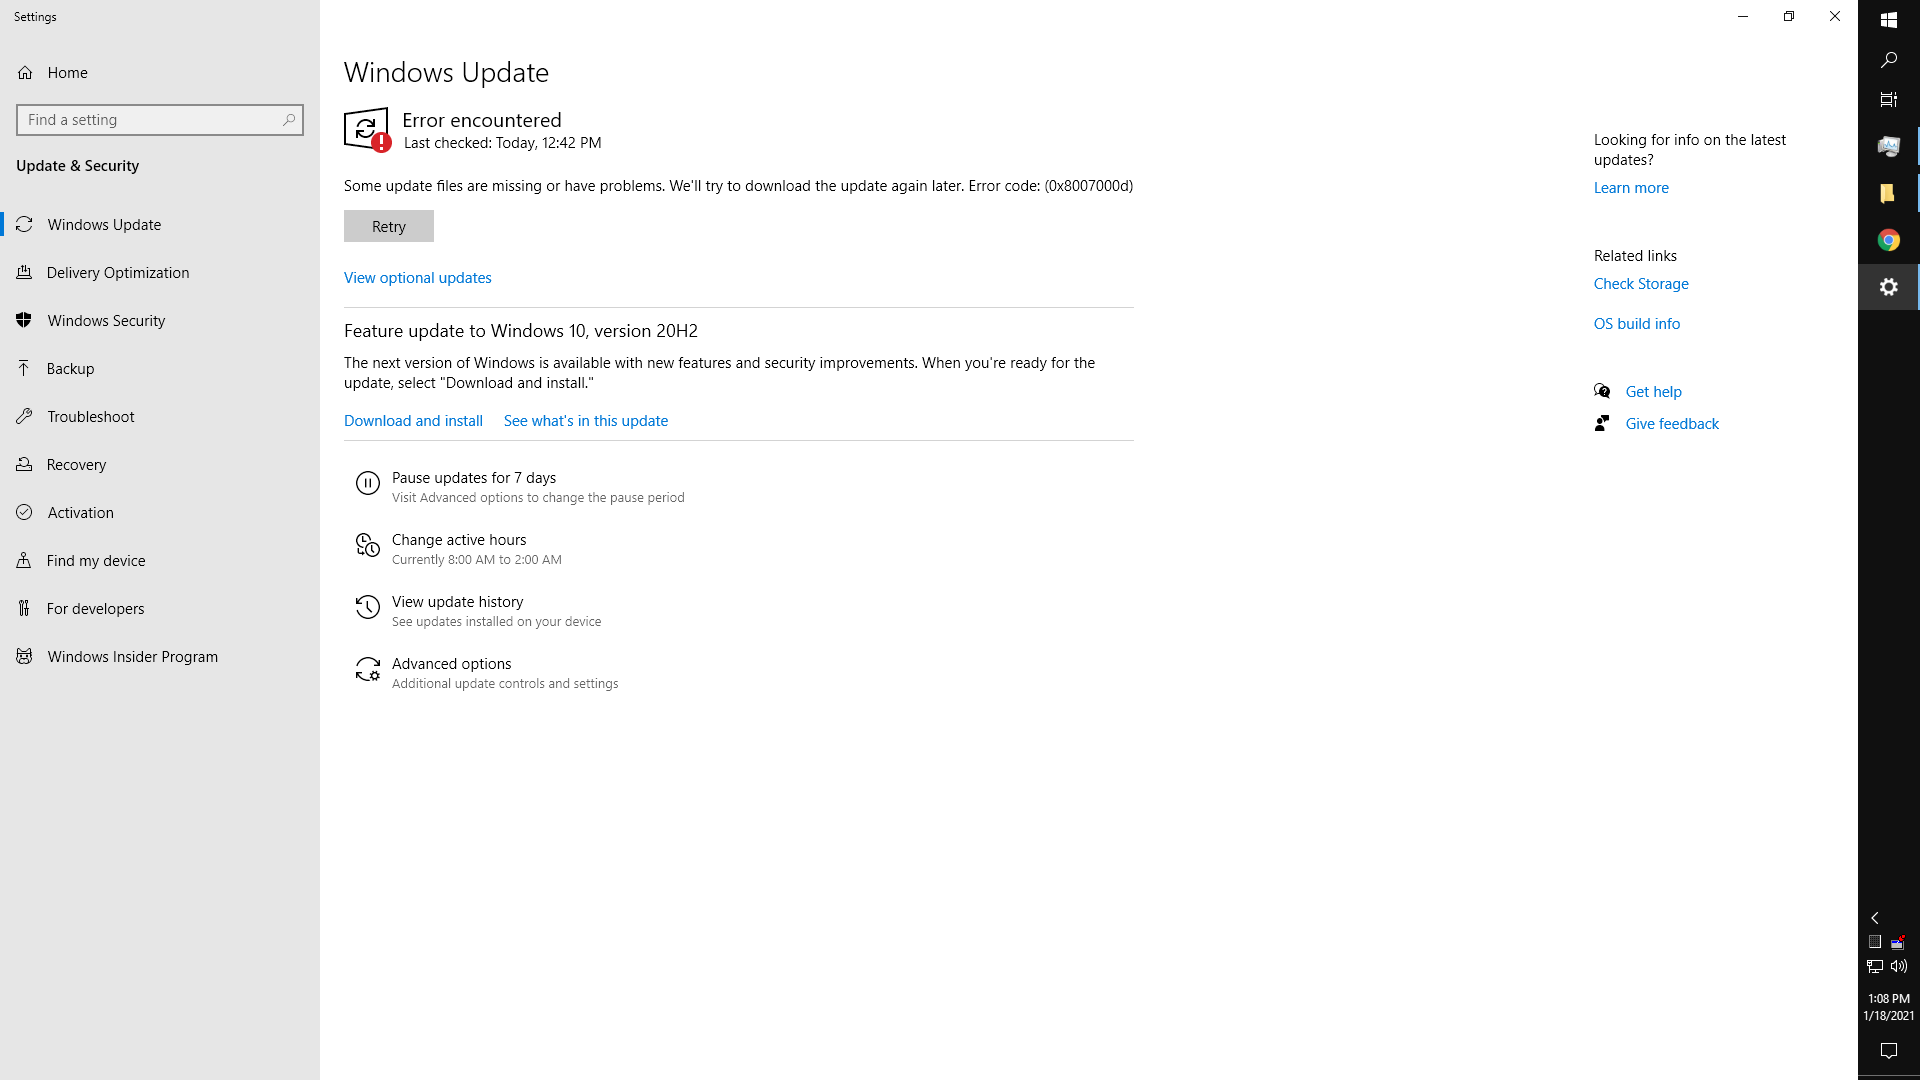 Windows Update Continuously fails "error 0x8007000d" 8738c38a-d868-44fb-92b9-85500ed8bcbe?upload=true.png